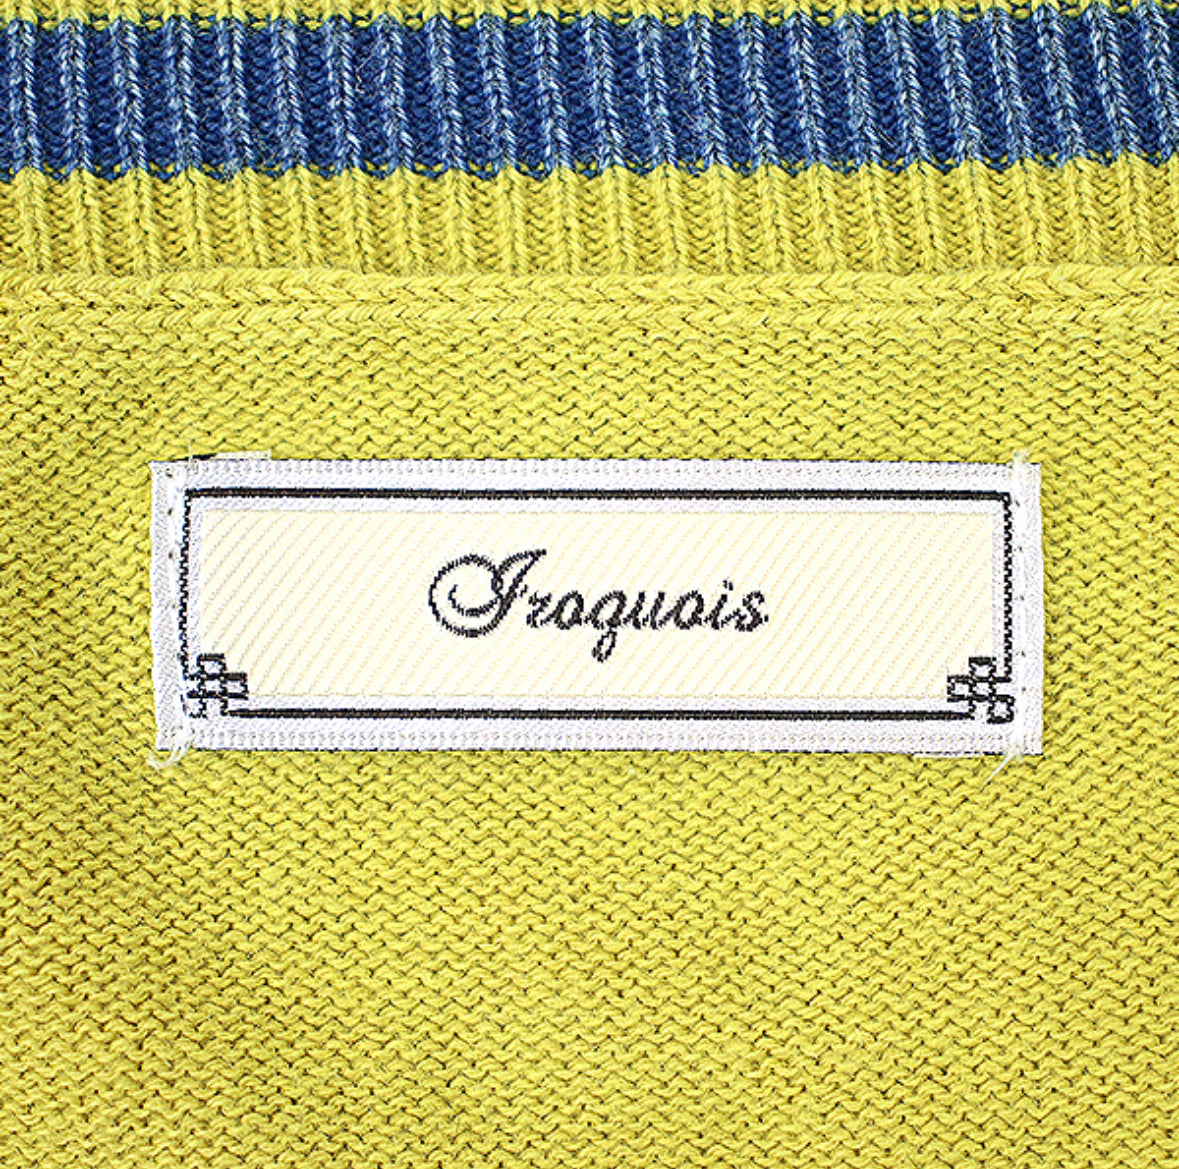 iroquois 18SS cotton sweater